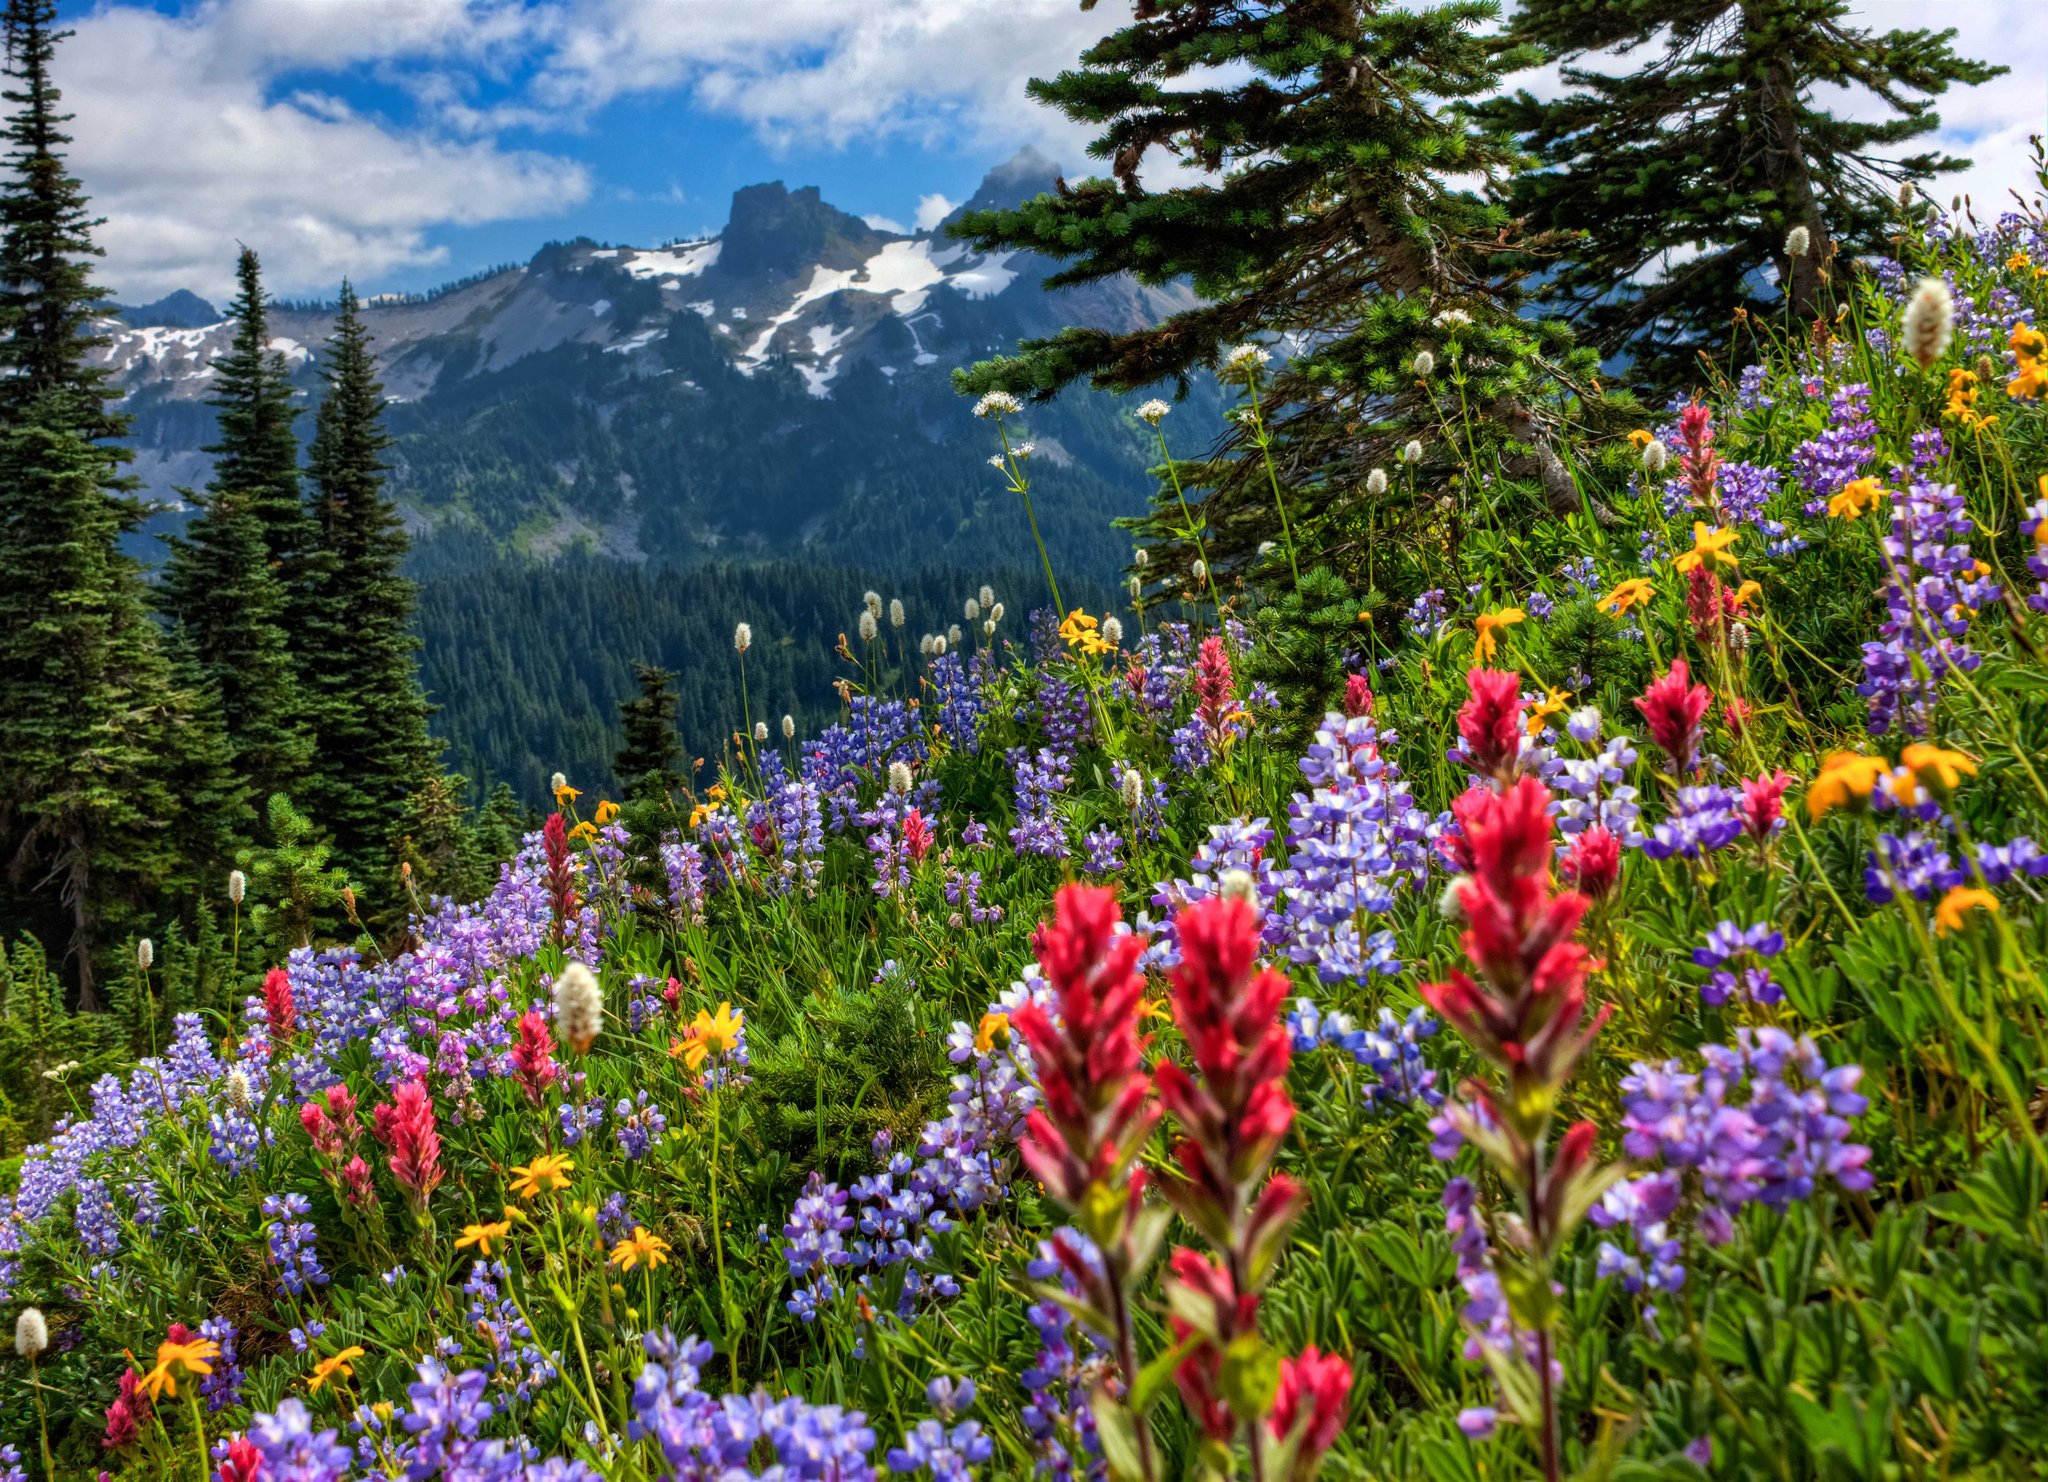  Rainier National Park mountains meadow flowers wallpaper background 2048x1482